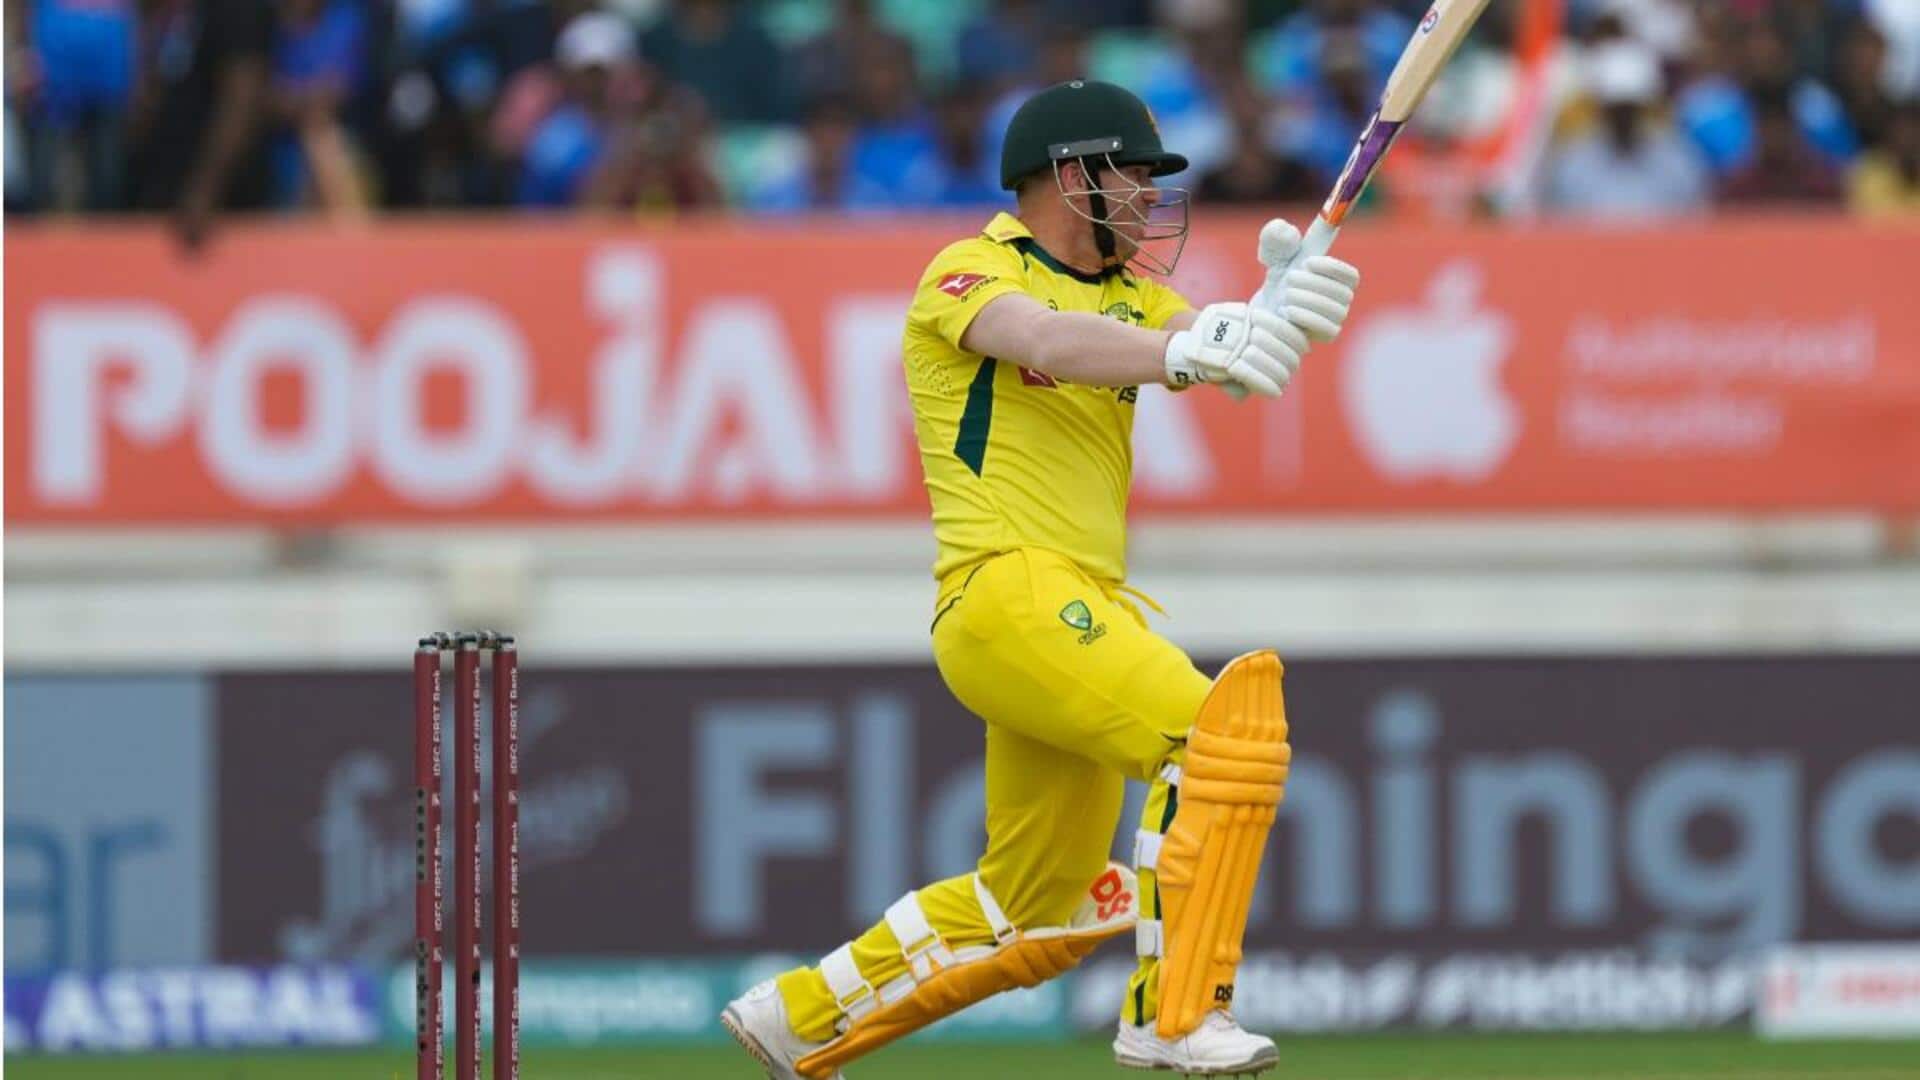 ICC World Cup, Australia vs Sri Lanka: Key player battles